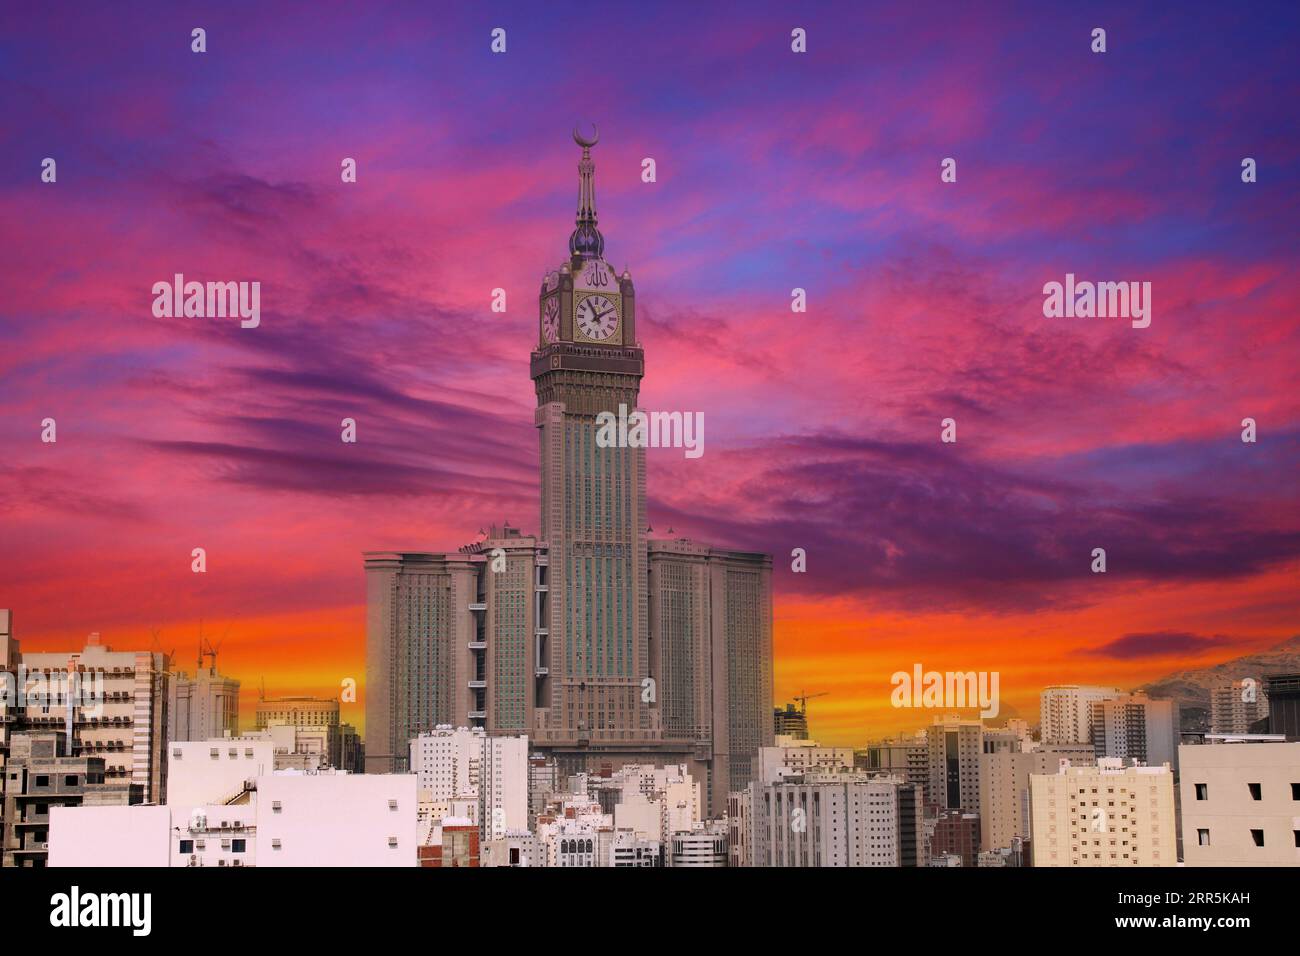 Royal Clock Tower with sunset. Mecca,Saudi Arabia. Stock Photo